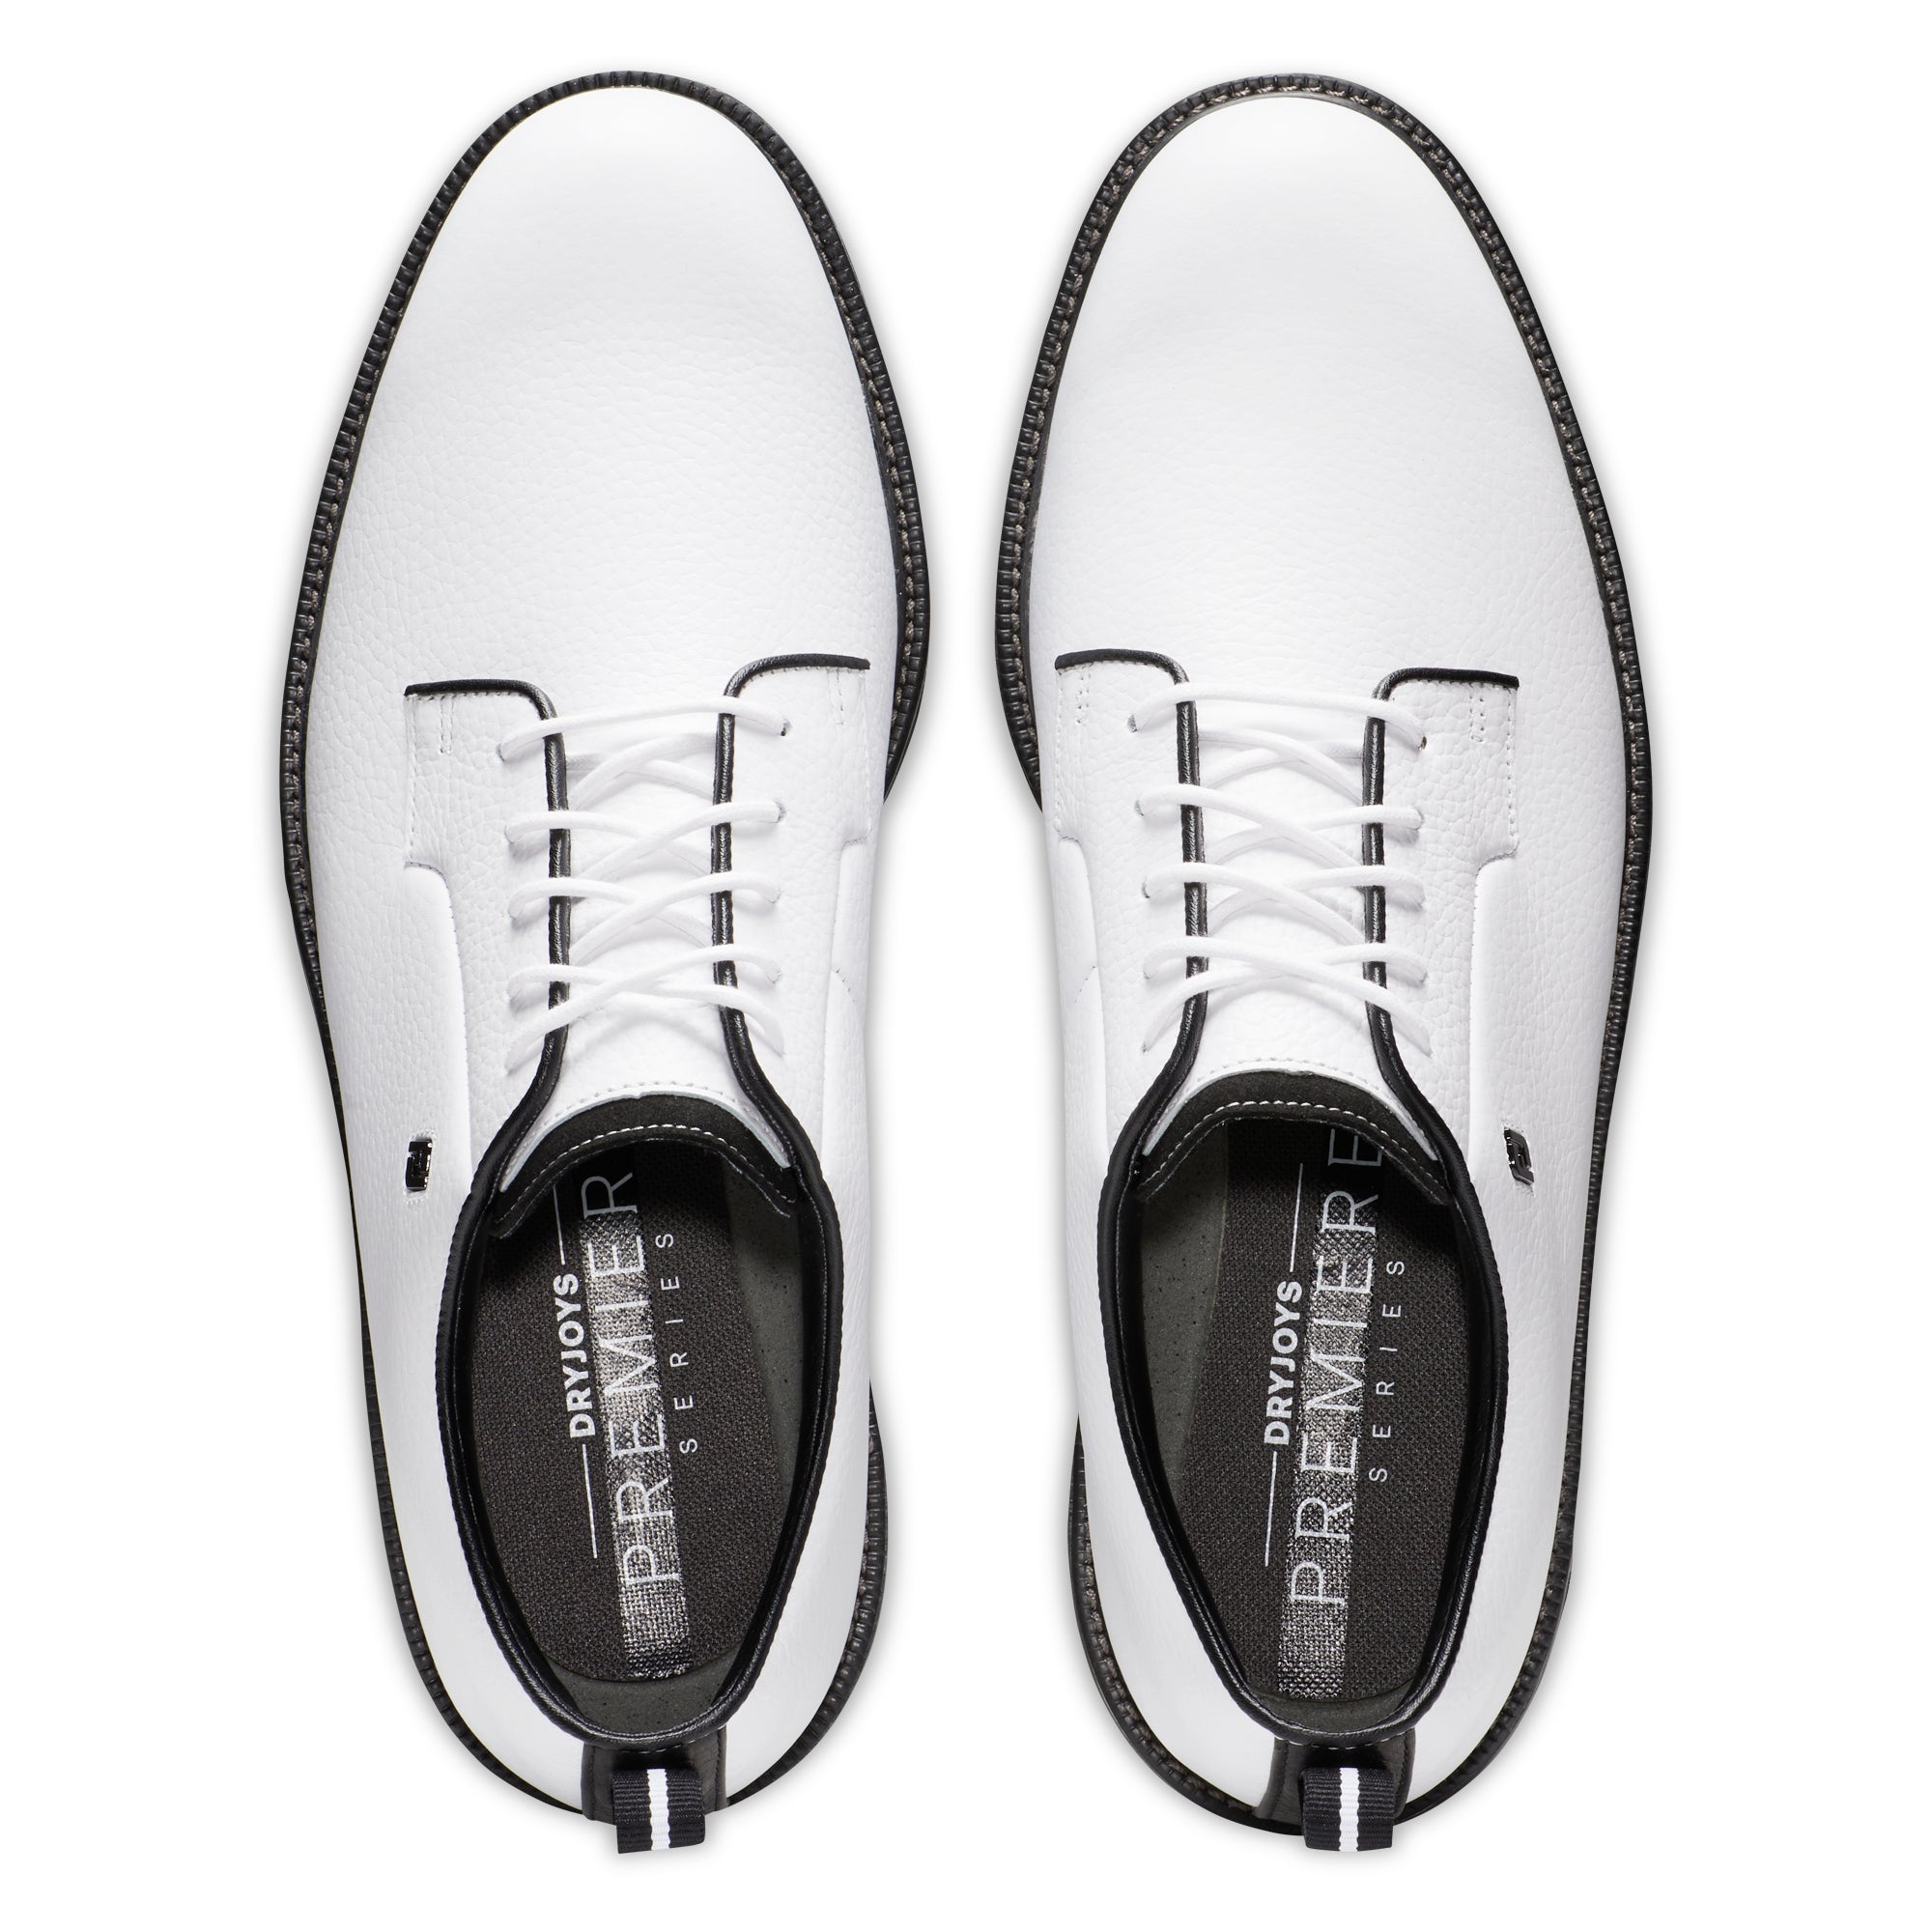 footjoy-premiere-series-field-golf-shoes-54327-white-black